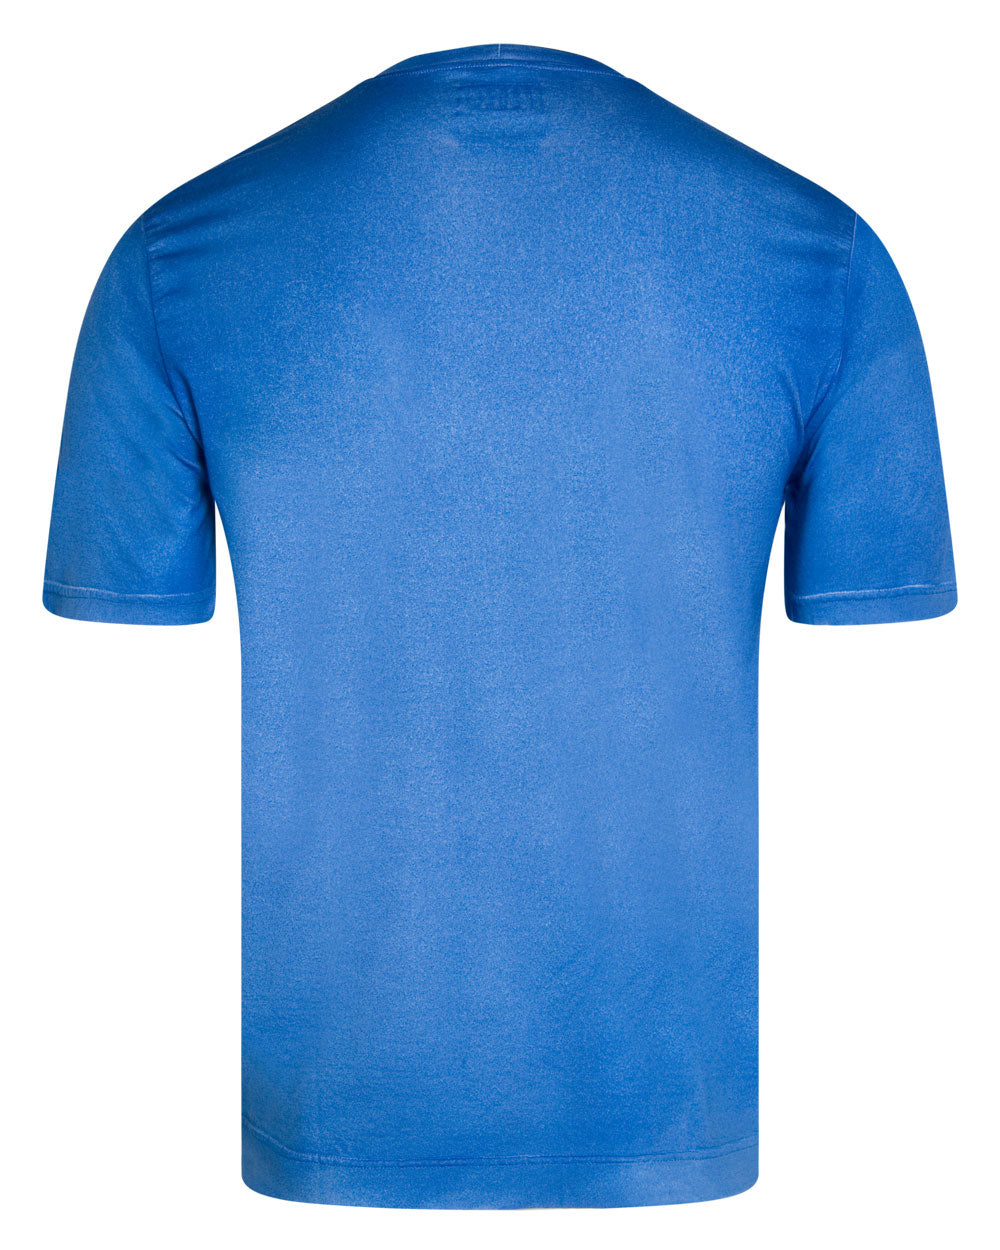 Royal Blue Jersey Supima T-Shirt